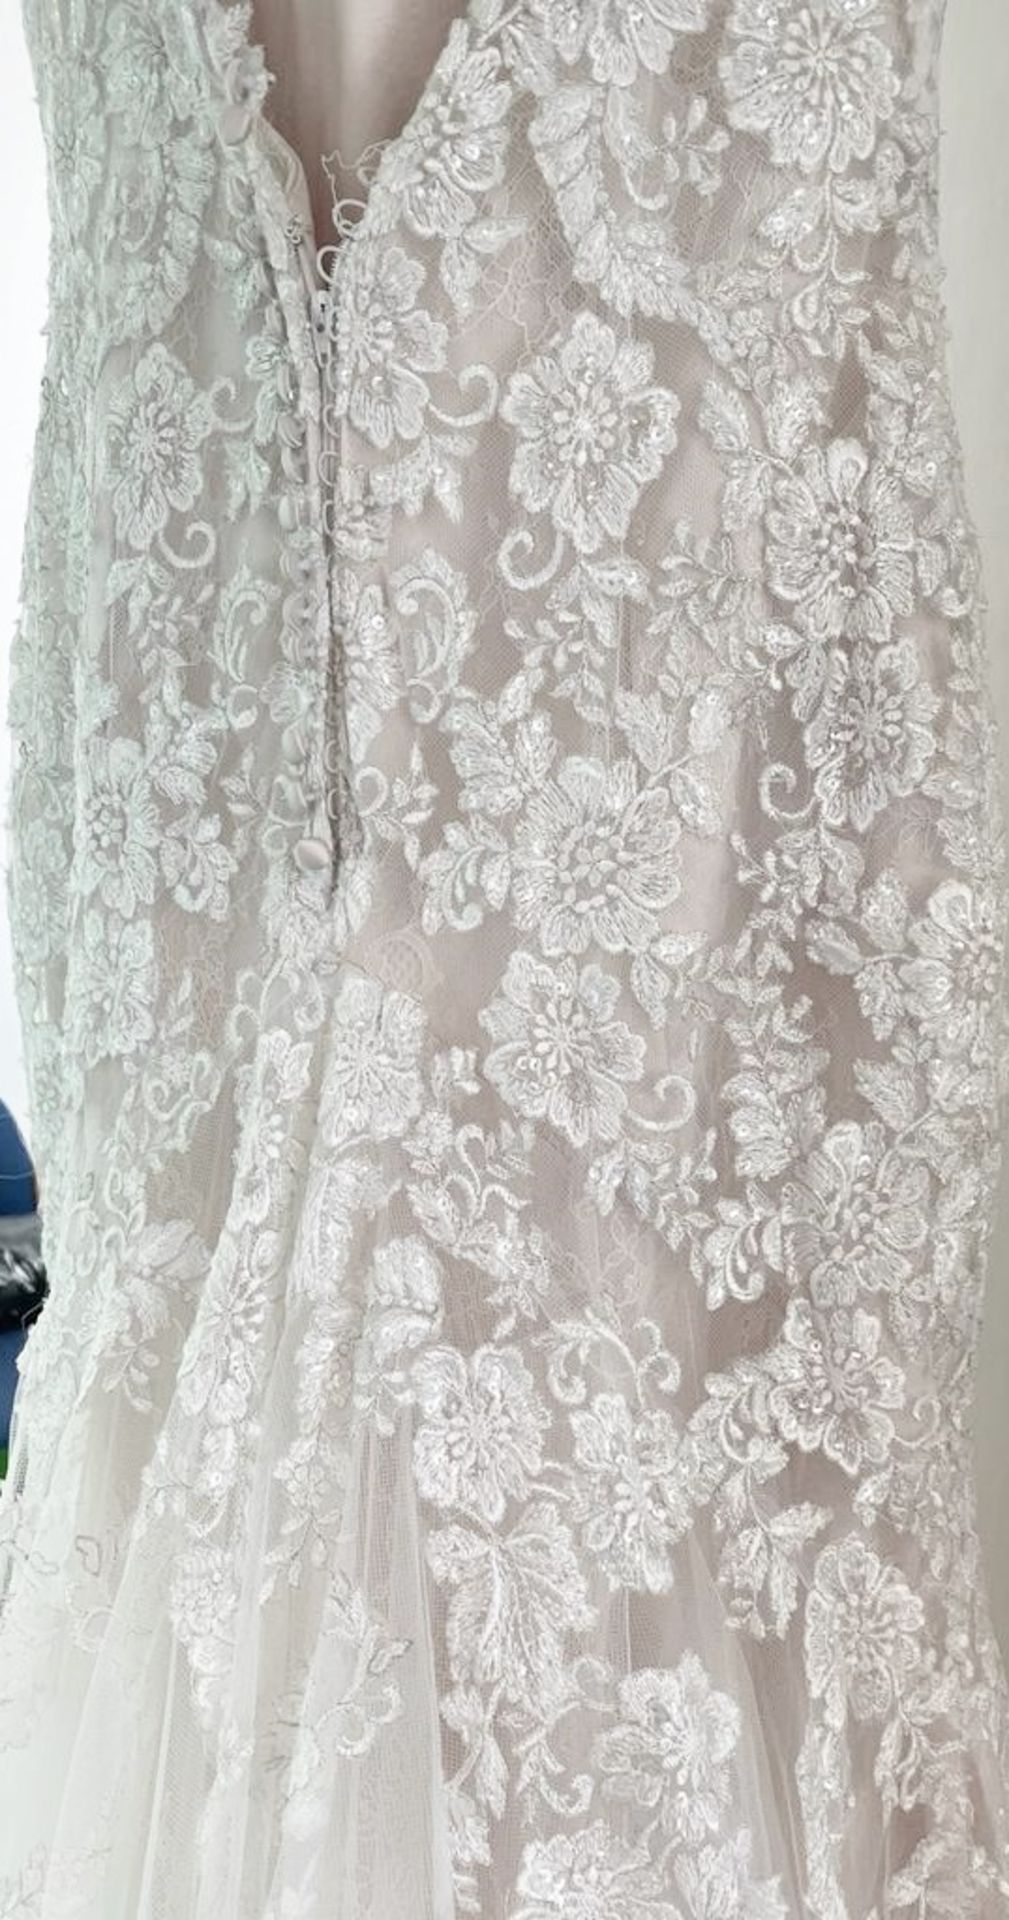 1 x DIANA LEGRANDE '7517' Designer Wedding Dress Bridal Gown - Size: UK 10 - Original RRP £1,800 - Image 14 of 18